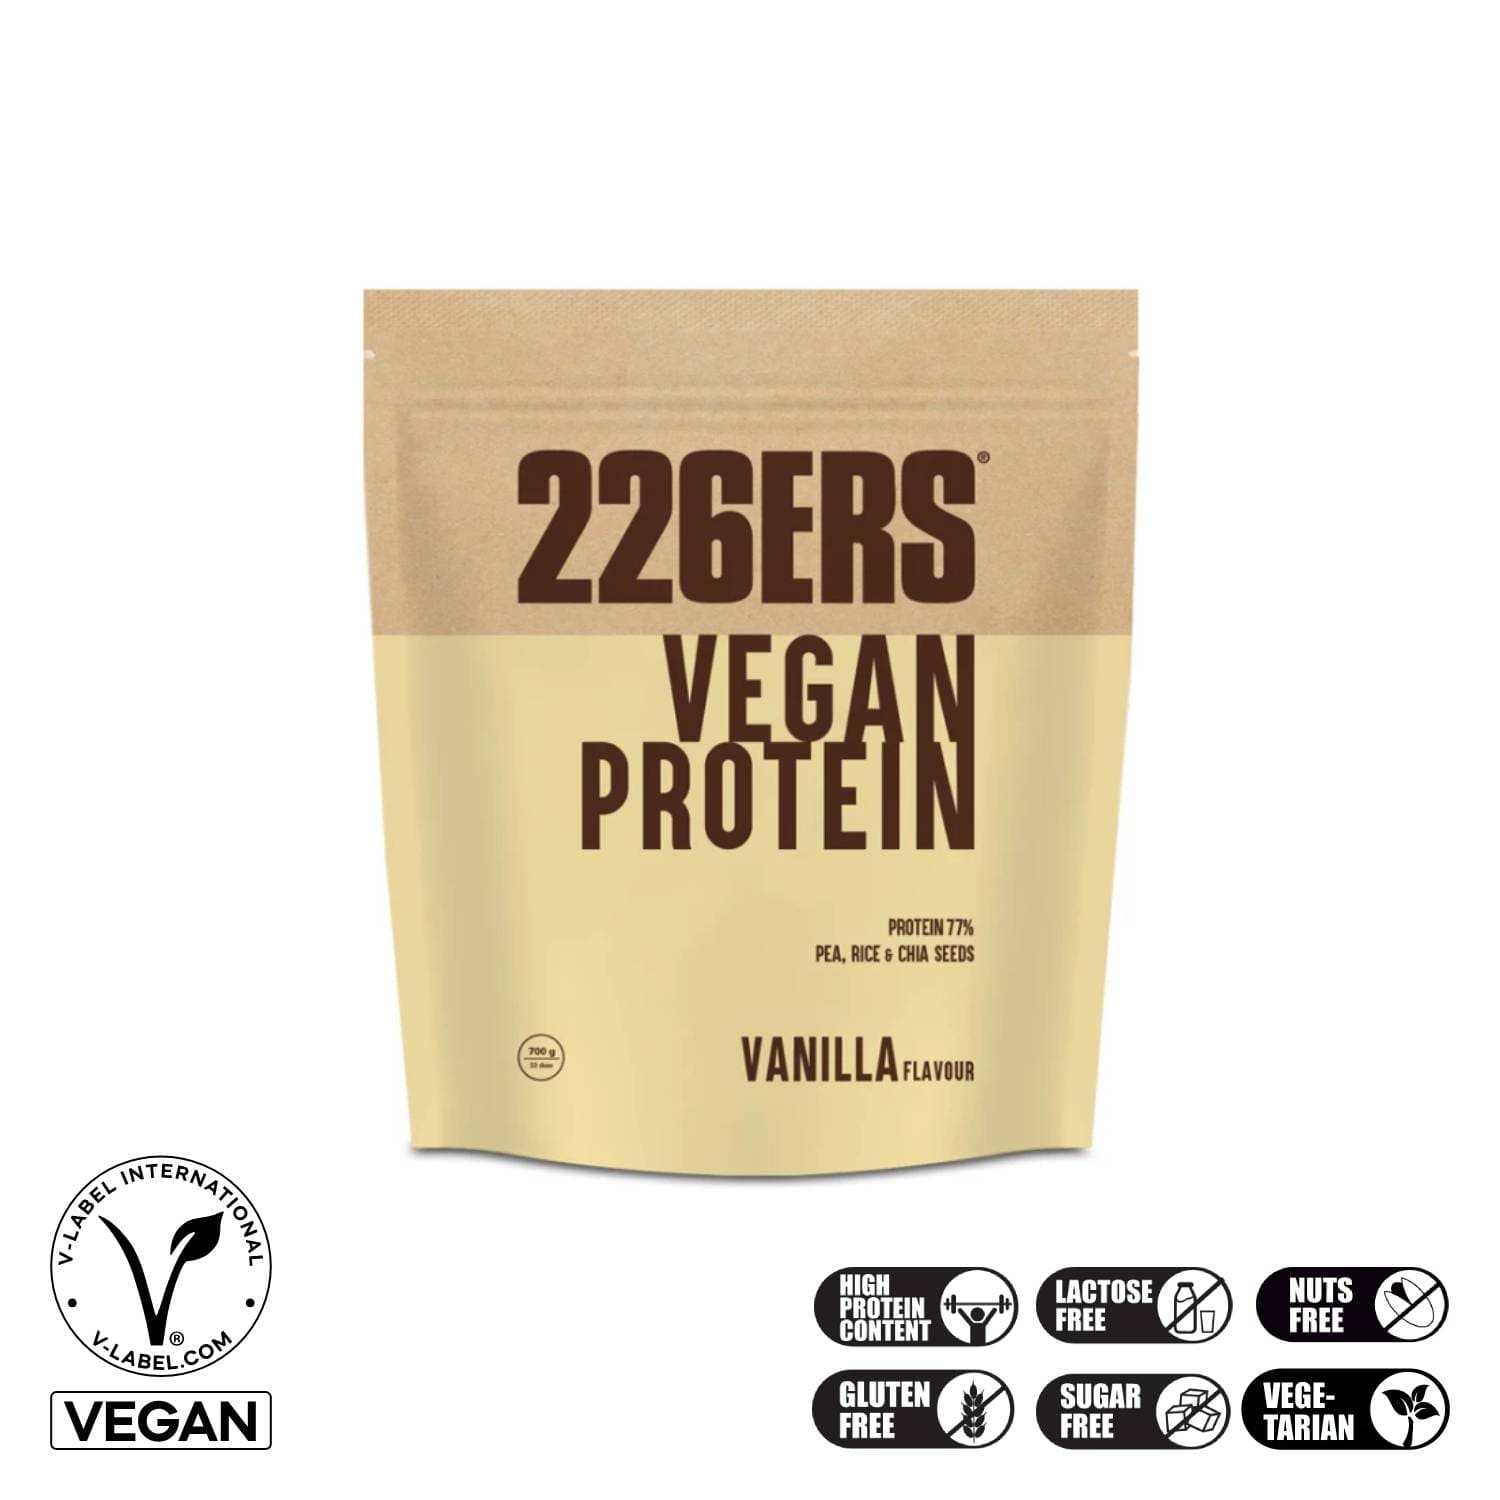 226ers Vegan Protein Vanilla